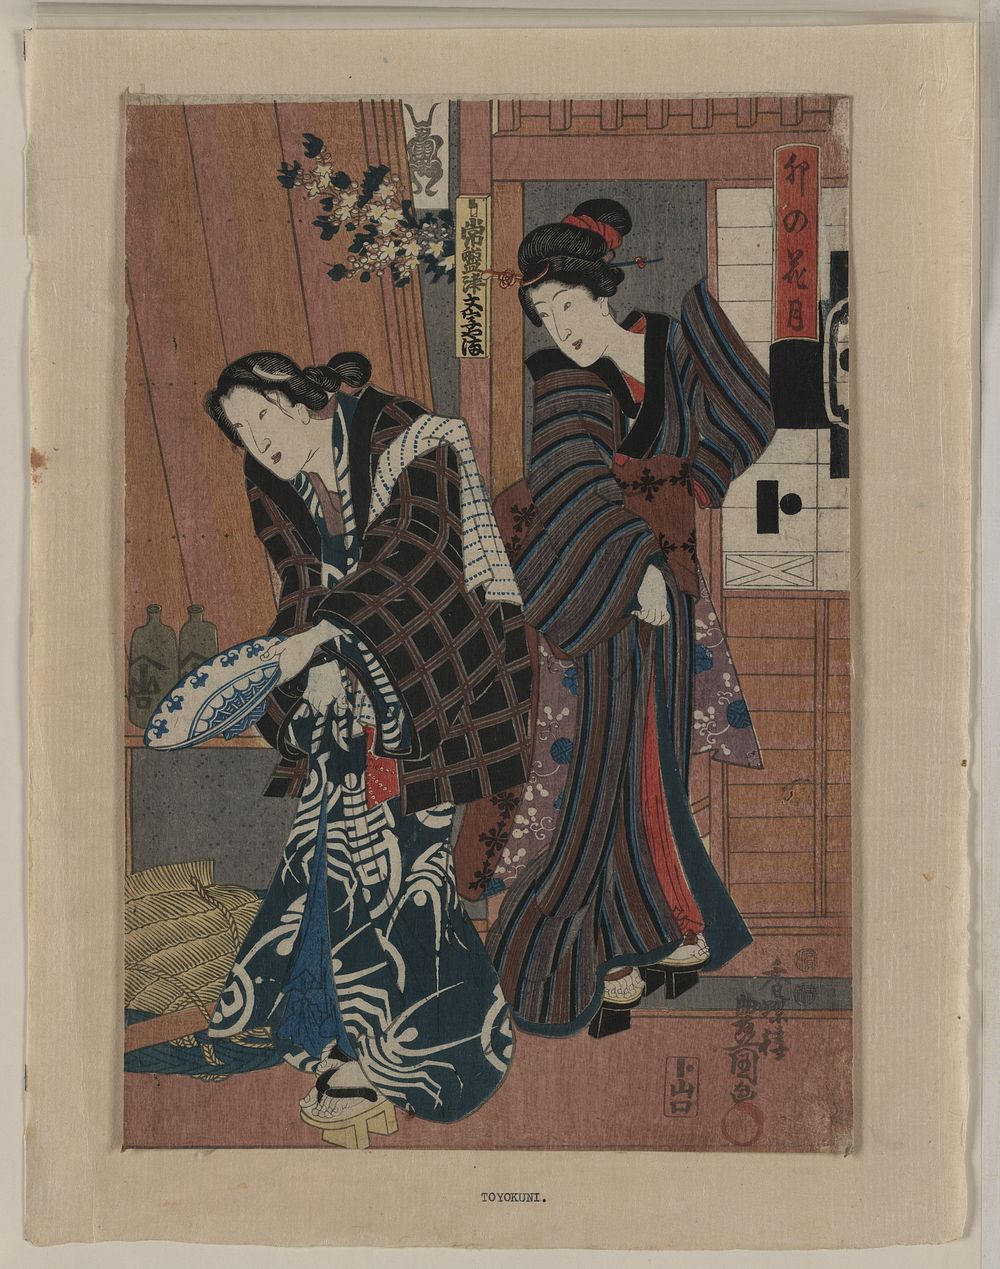 Unohana zuki. Original from the Library of Congress.